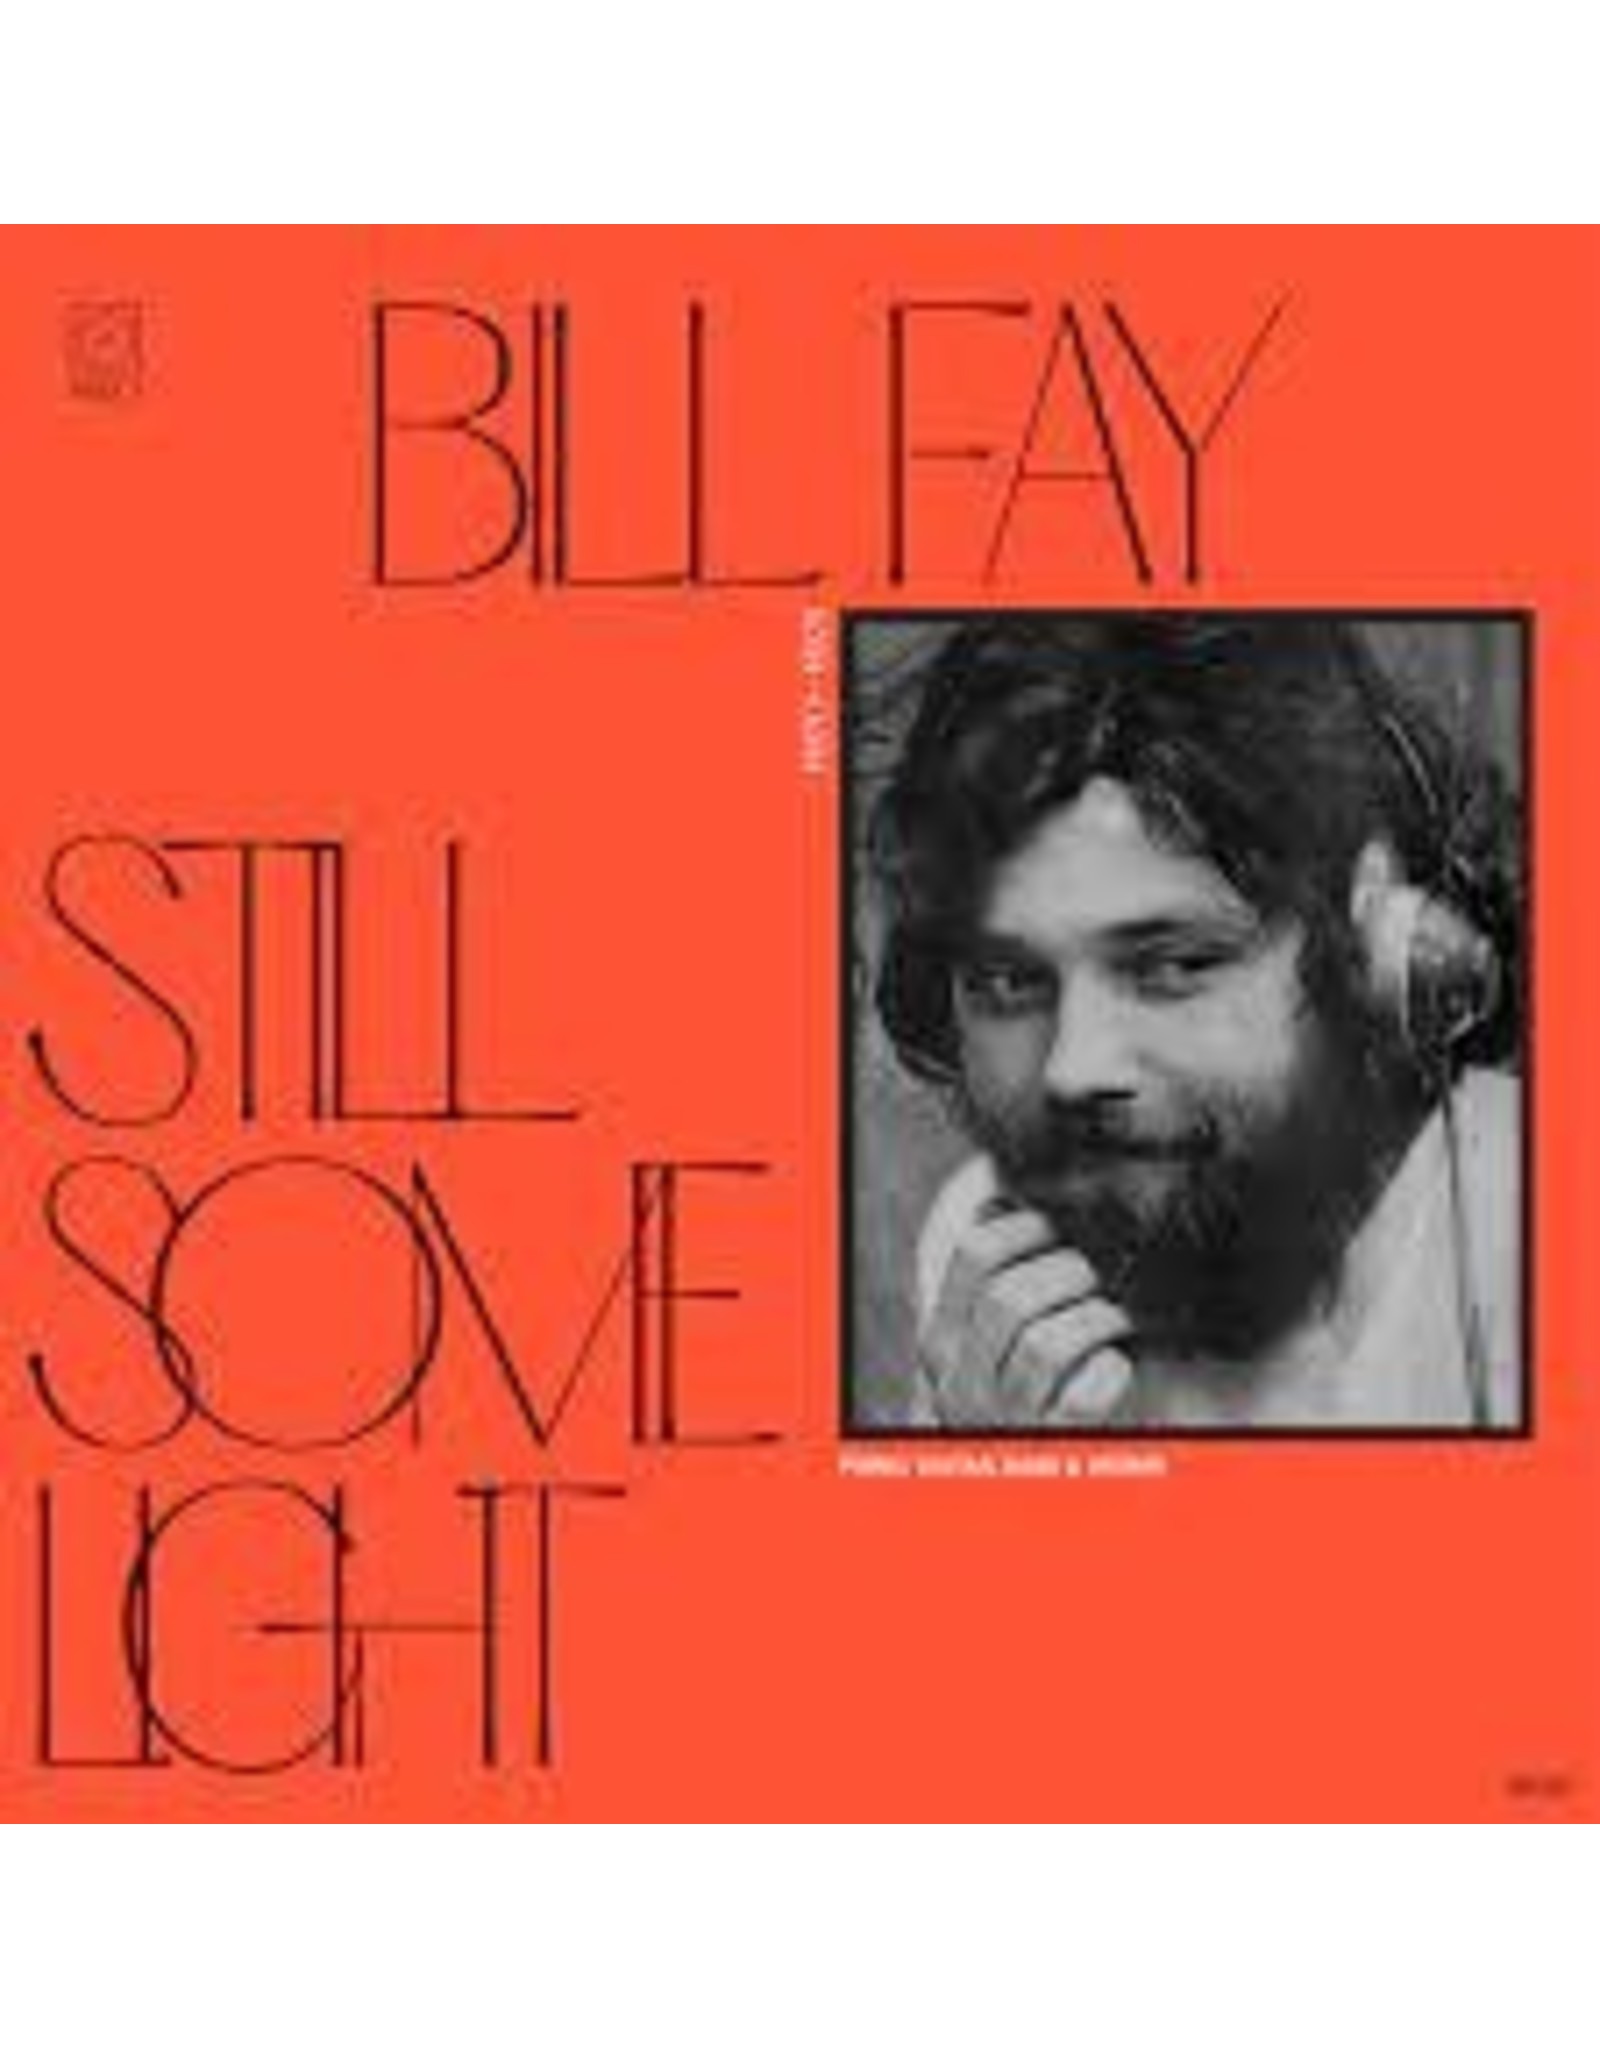 Fay, Bill -  Still Some Light Pt1: 1970 - 1971 Piano Guitar Bass & Drums LP